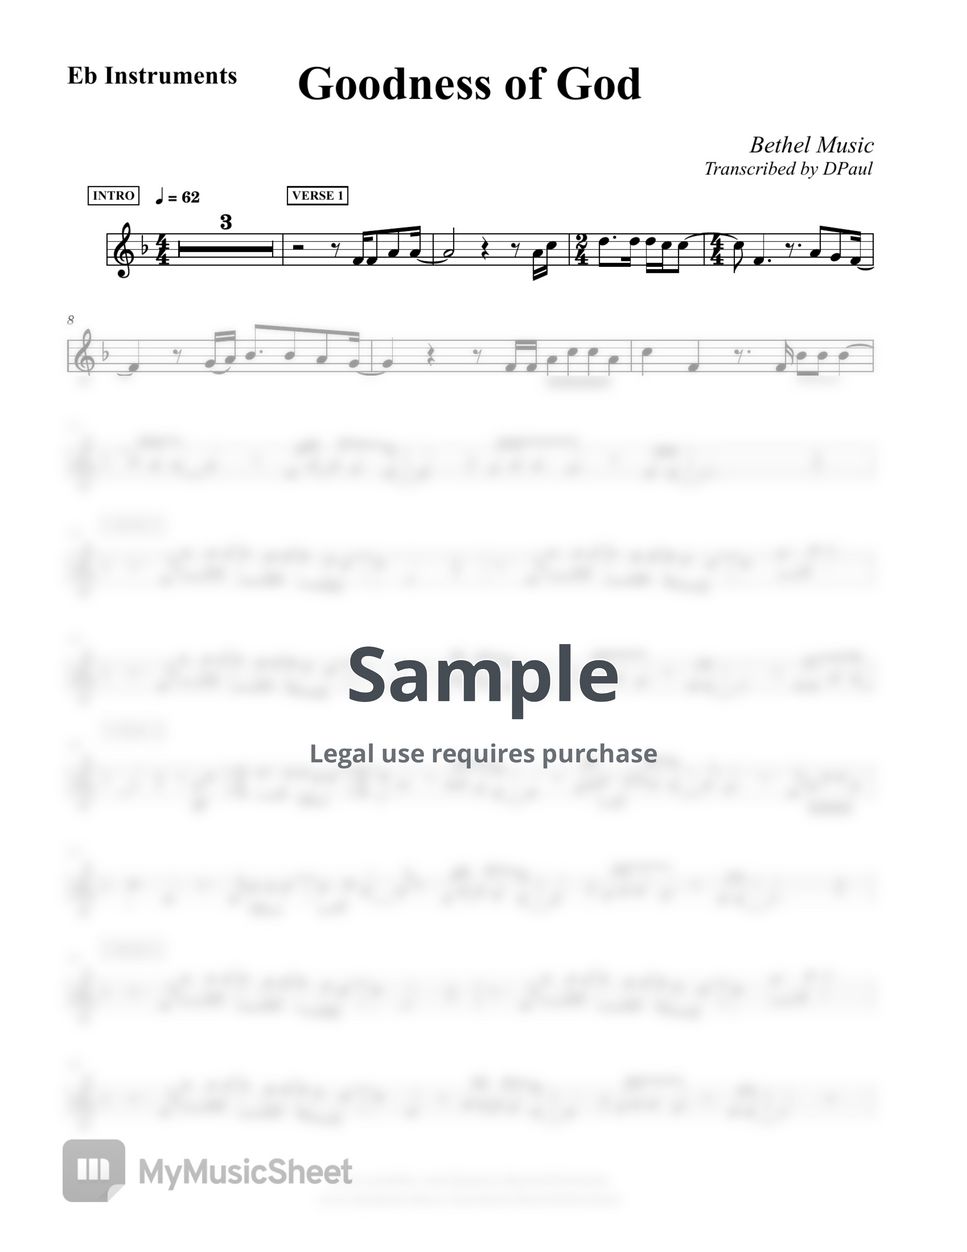 Bethel Music - Goodness of God (Music Sheet for Eb Instruments  || Alto Sax | Baritone Sax | Alto Clarinet  | etc.) by D.Paul